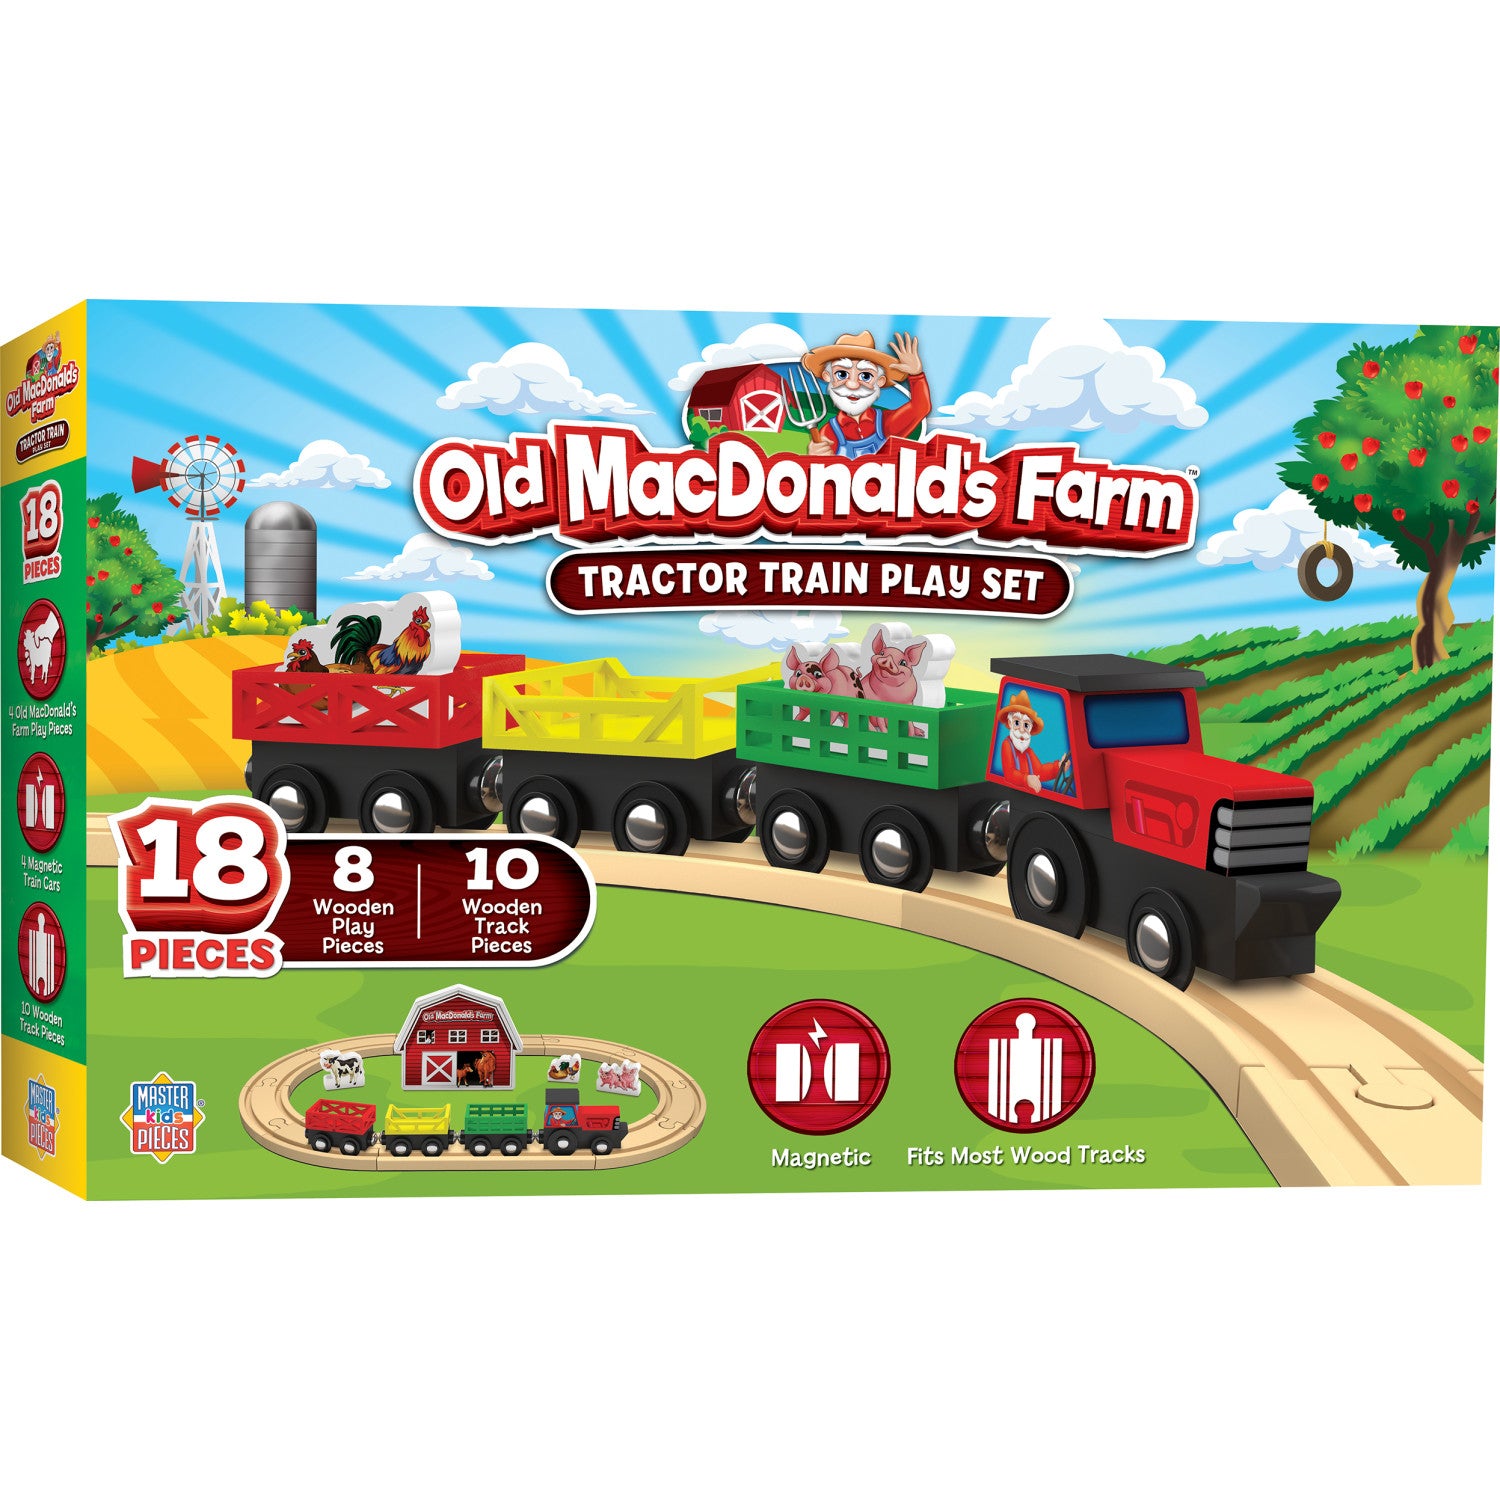 Old MacDonald's Farm Tractor Train Play Set